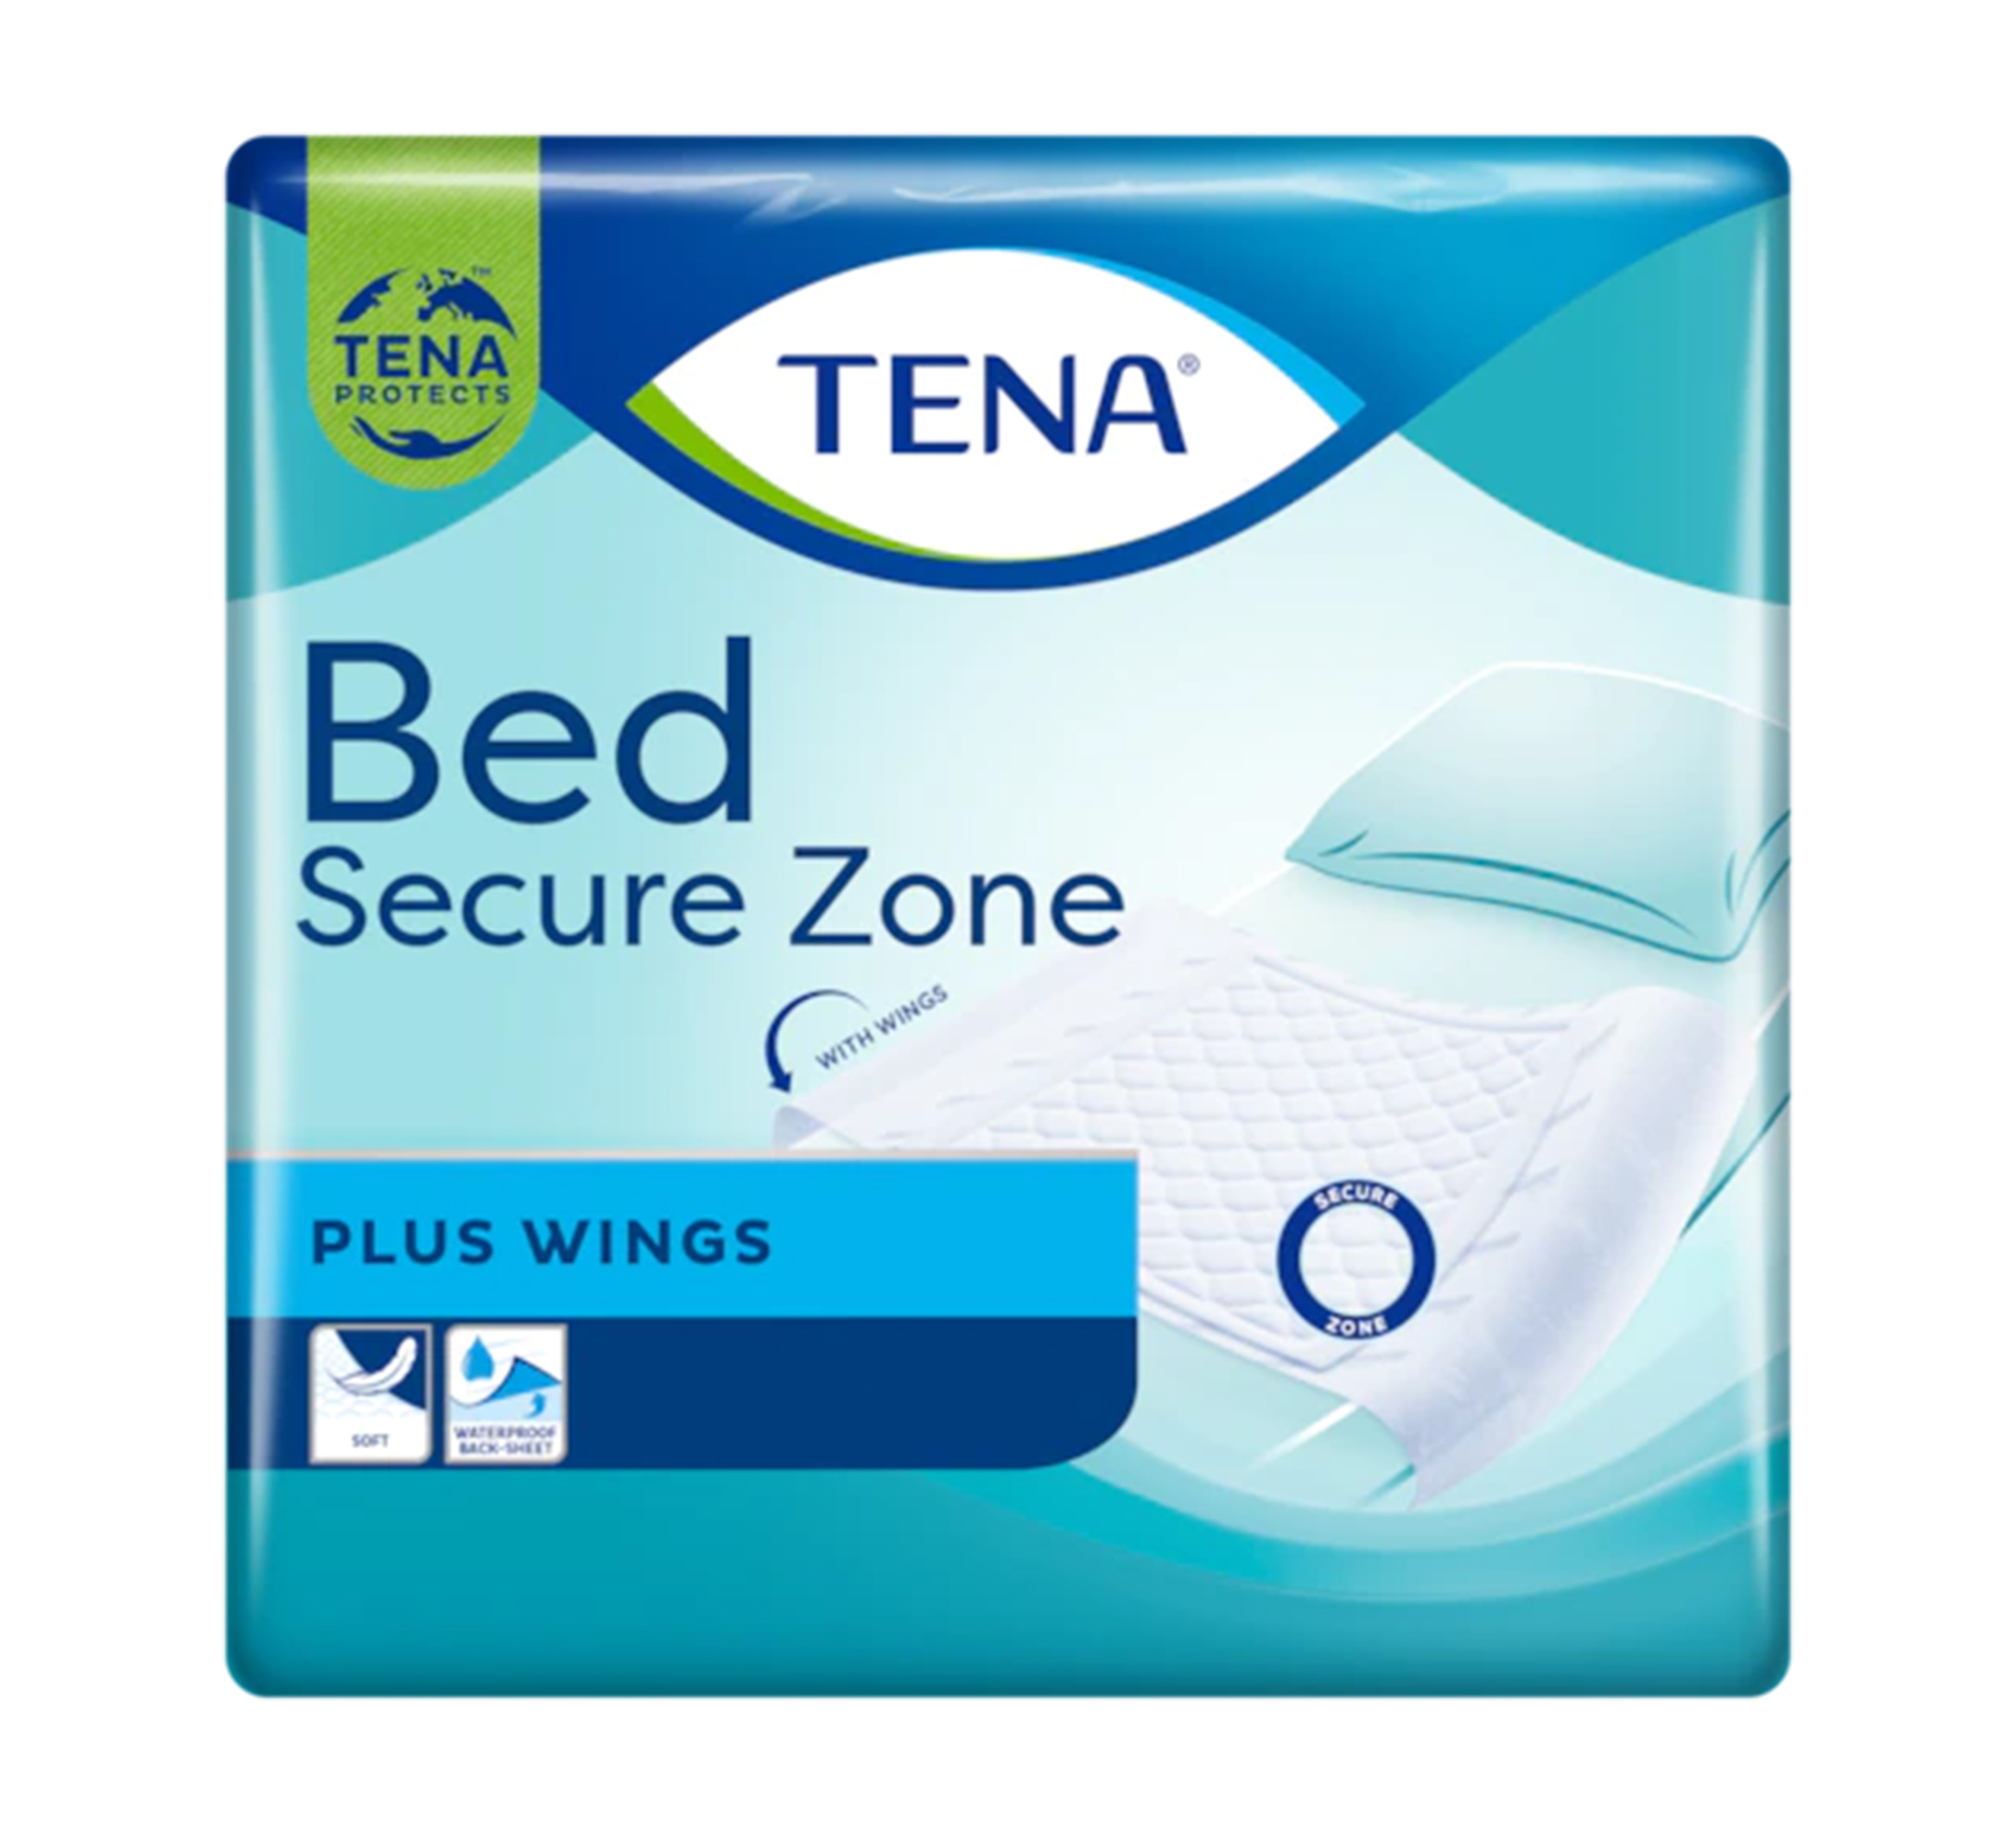 TENA Bed Secure Zone Plus Wings Inkontinenz-Schutzunterlagen, 180x80cm, 20 Stk.